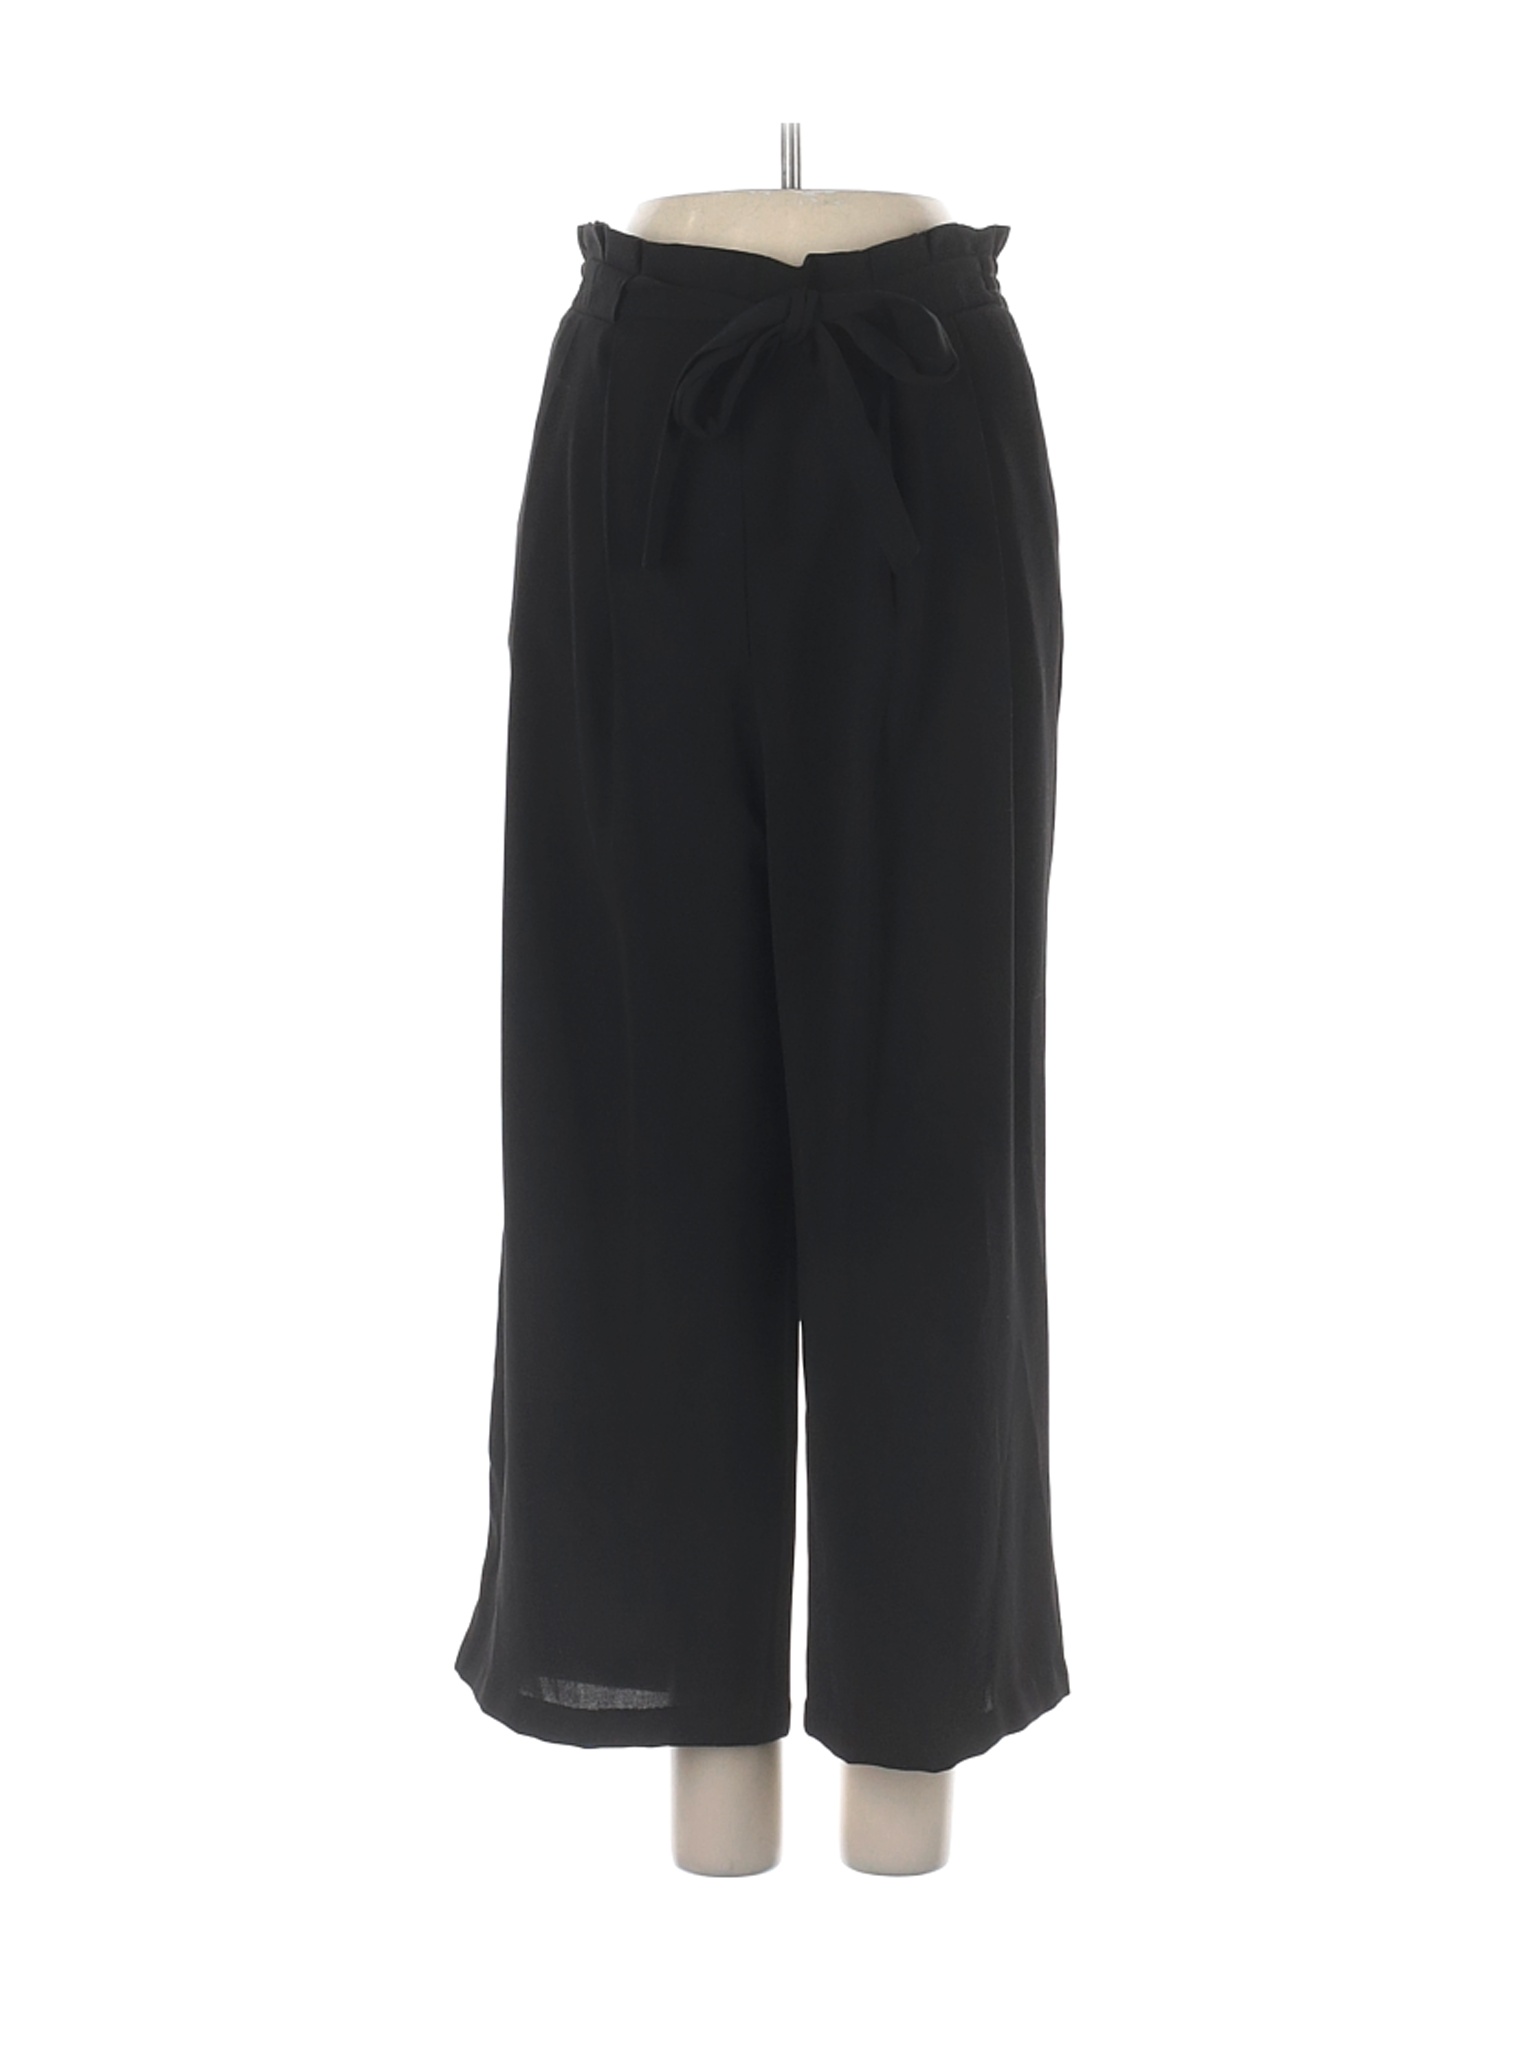 Zara Basic Women Black Casual Pants XS | eBay